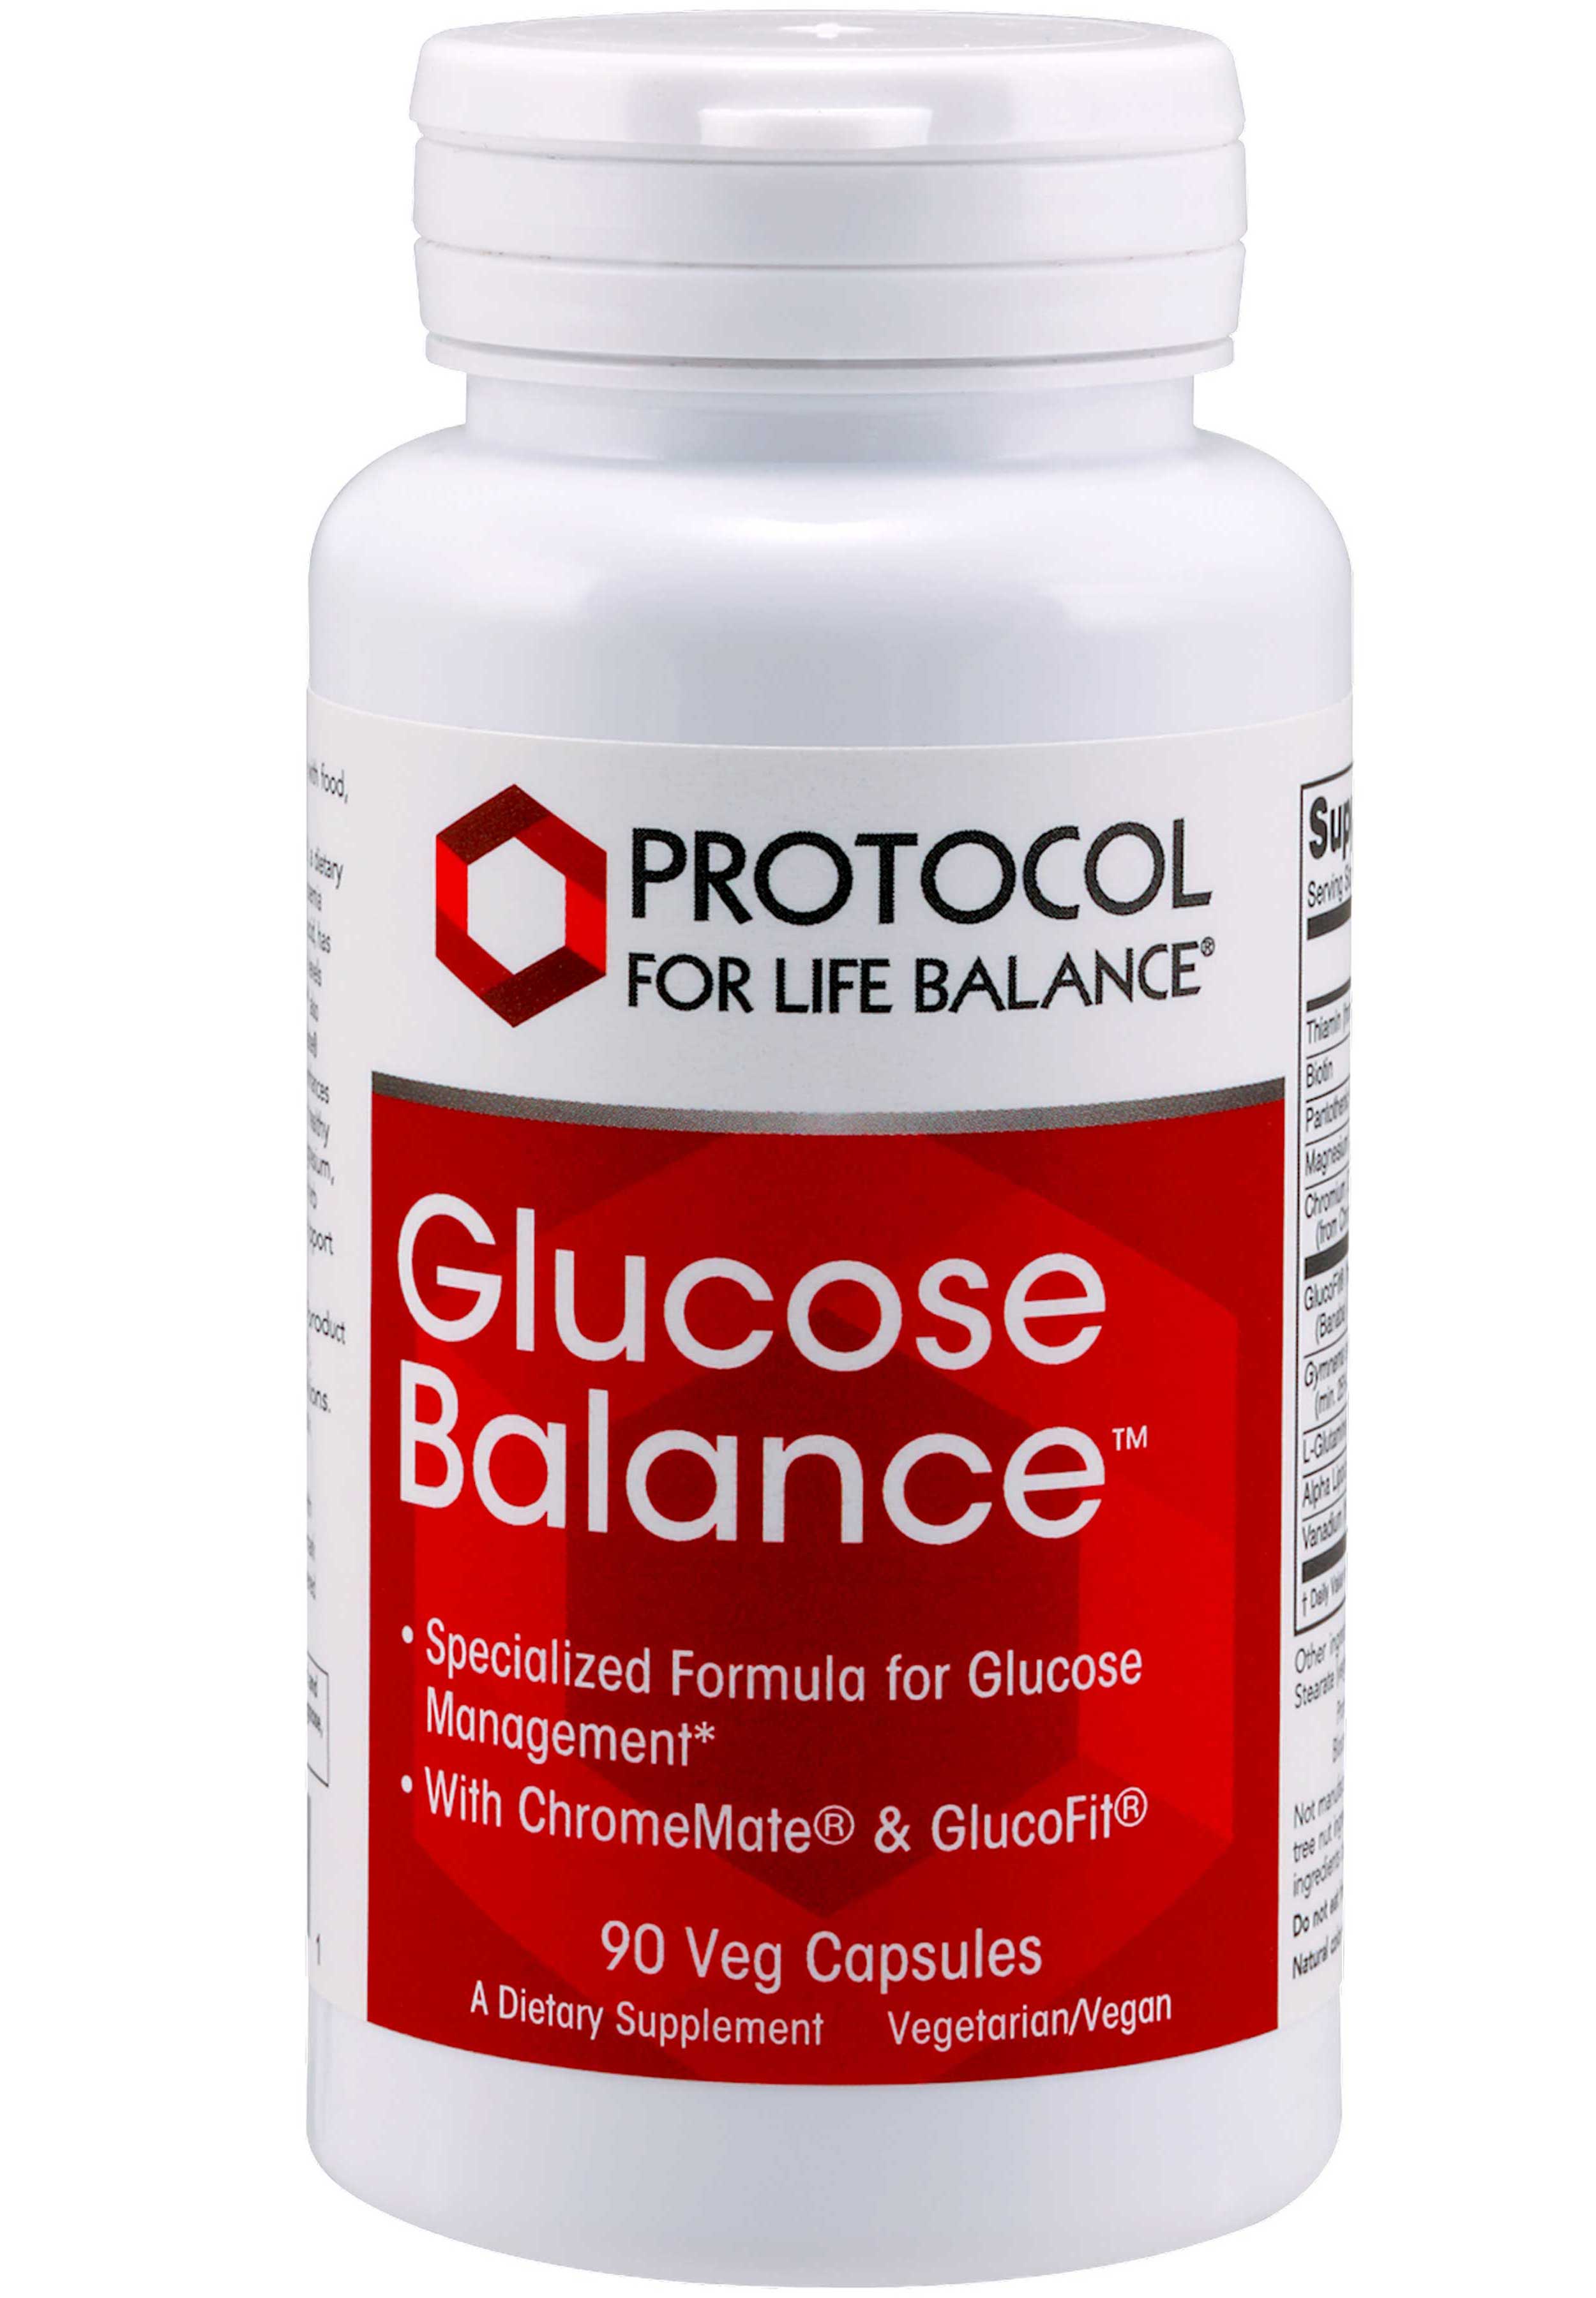 Protocol for Life Balance Glucose Balance